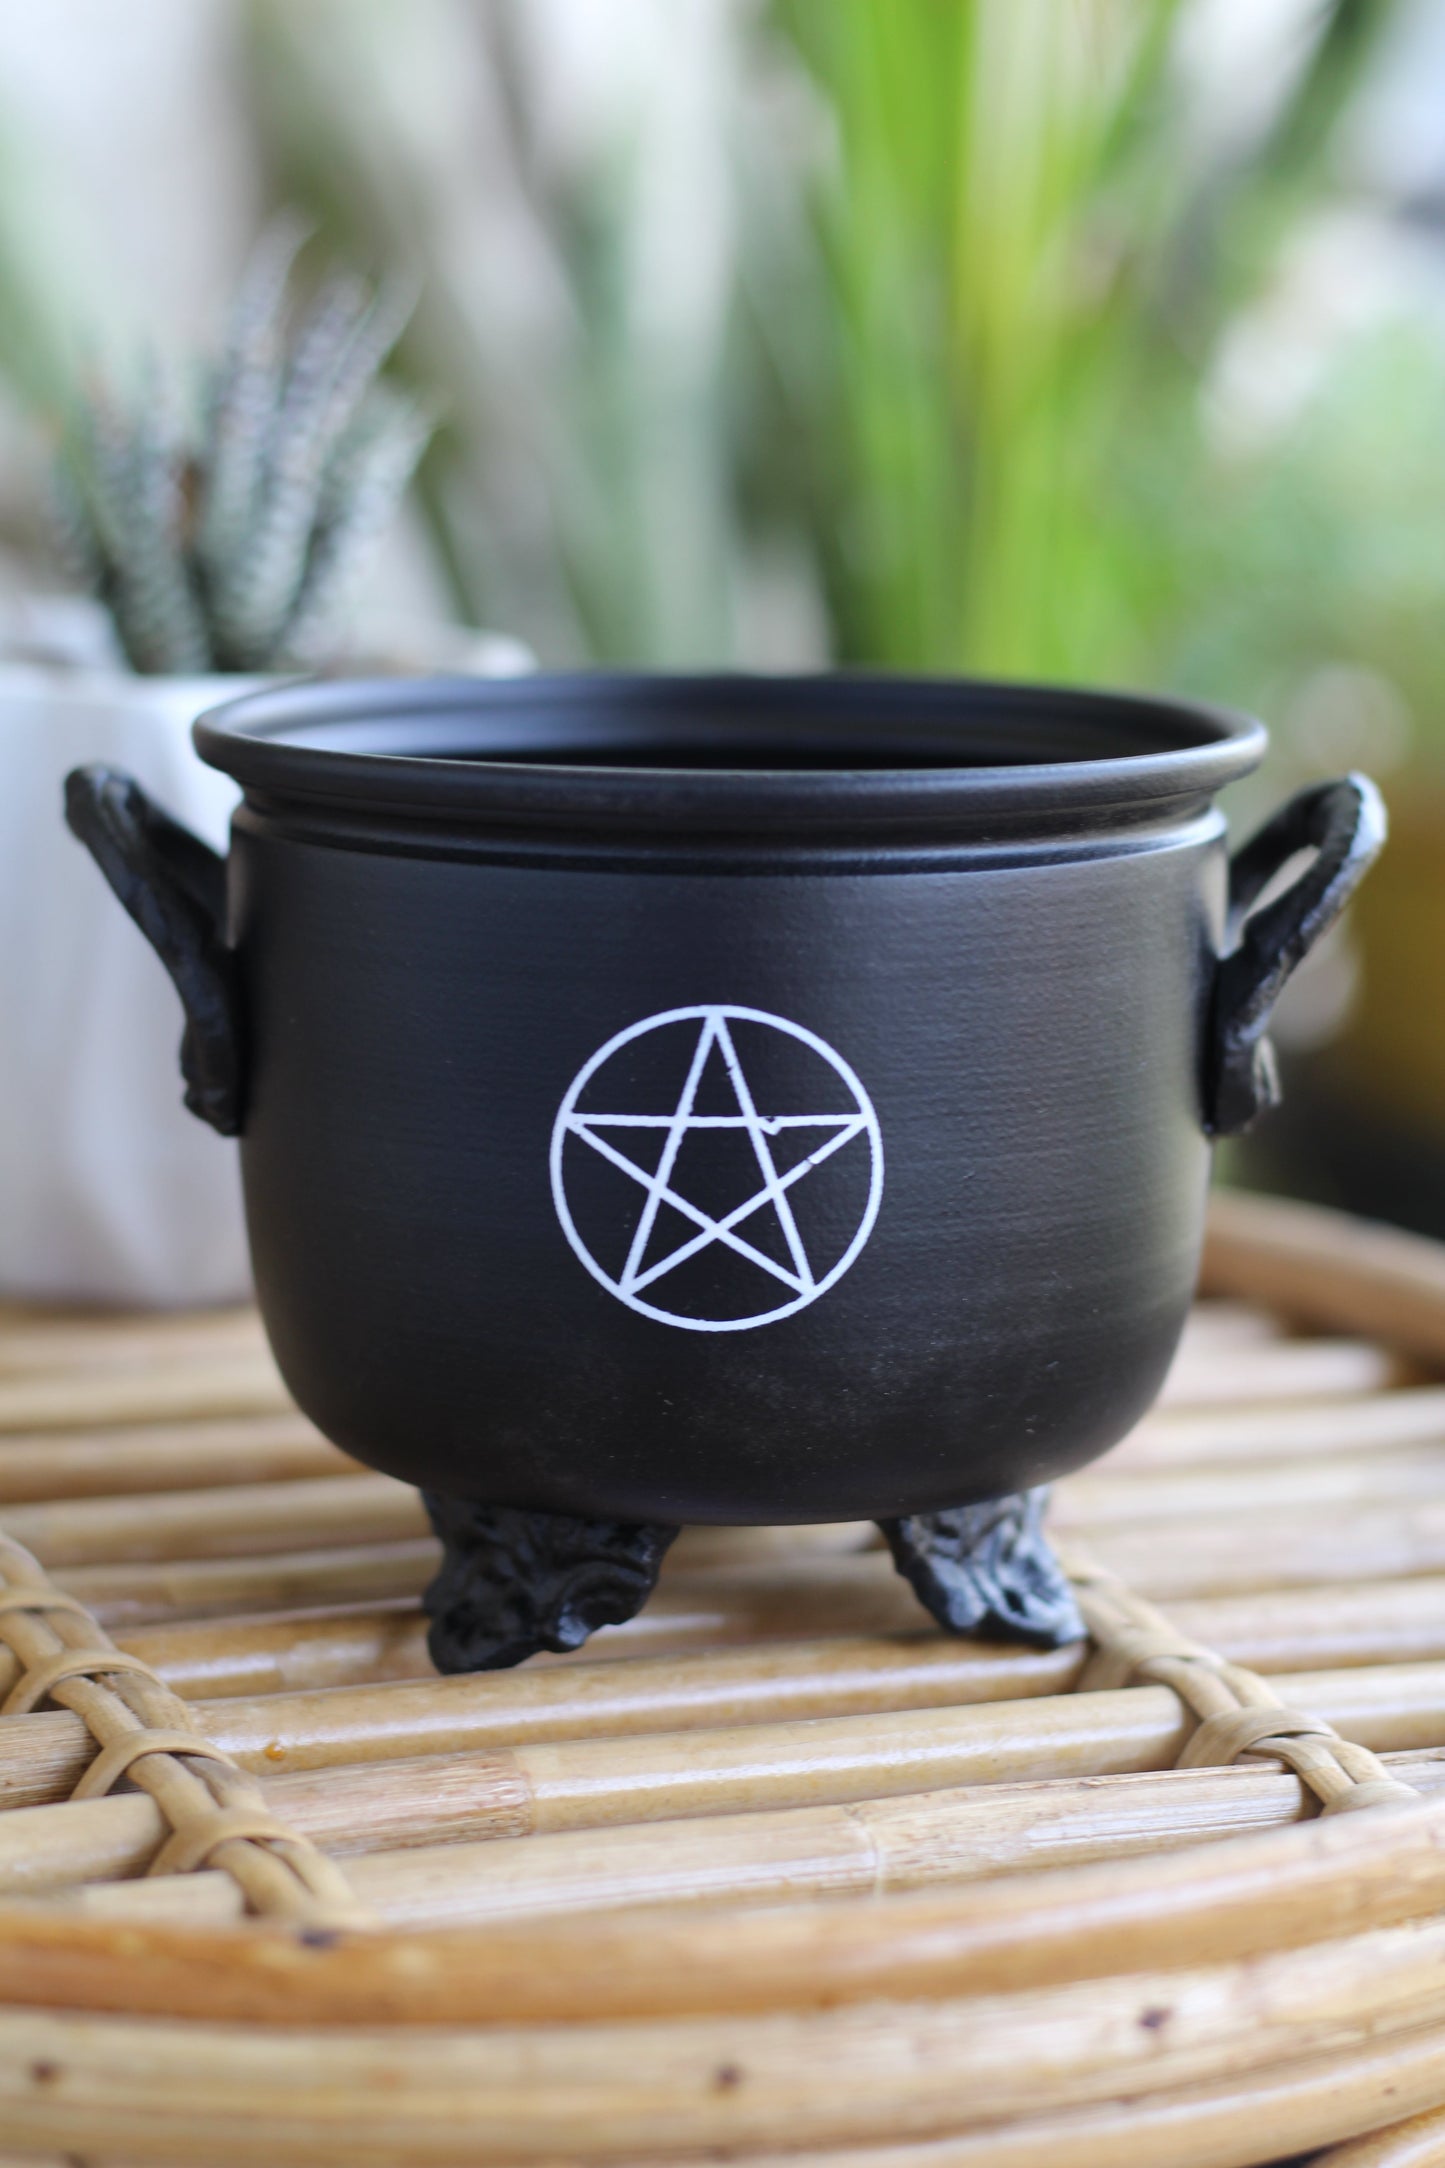 Pentacle Print Cauldron Altarware | Altar